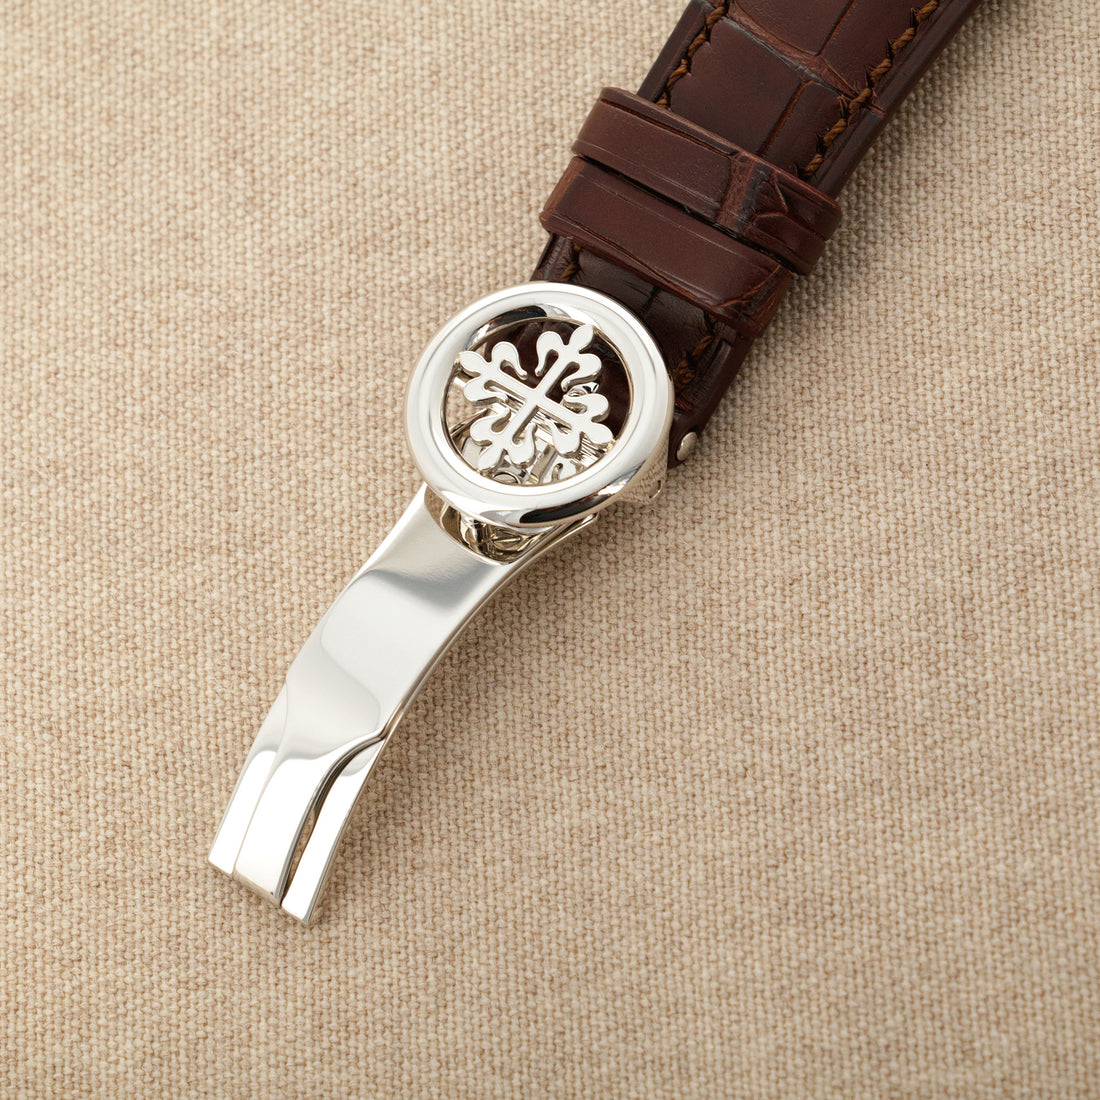 Patek Philippe Platinum Grand Complications Minute Repeater Watch Ref. 5207